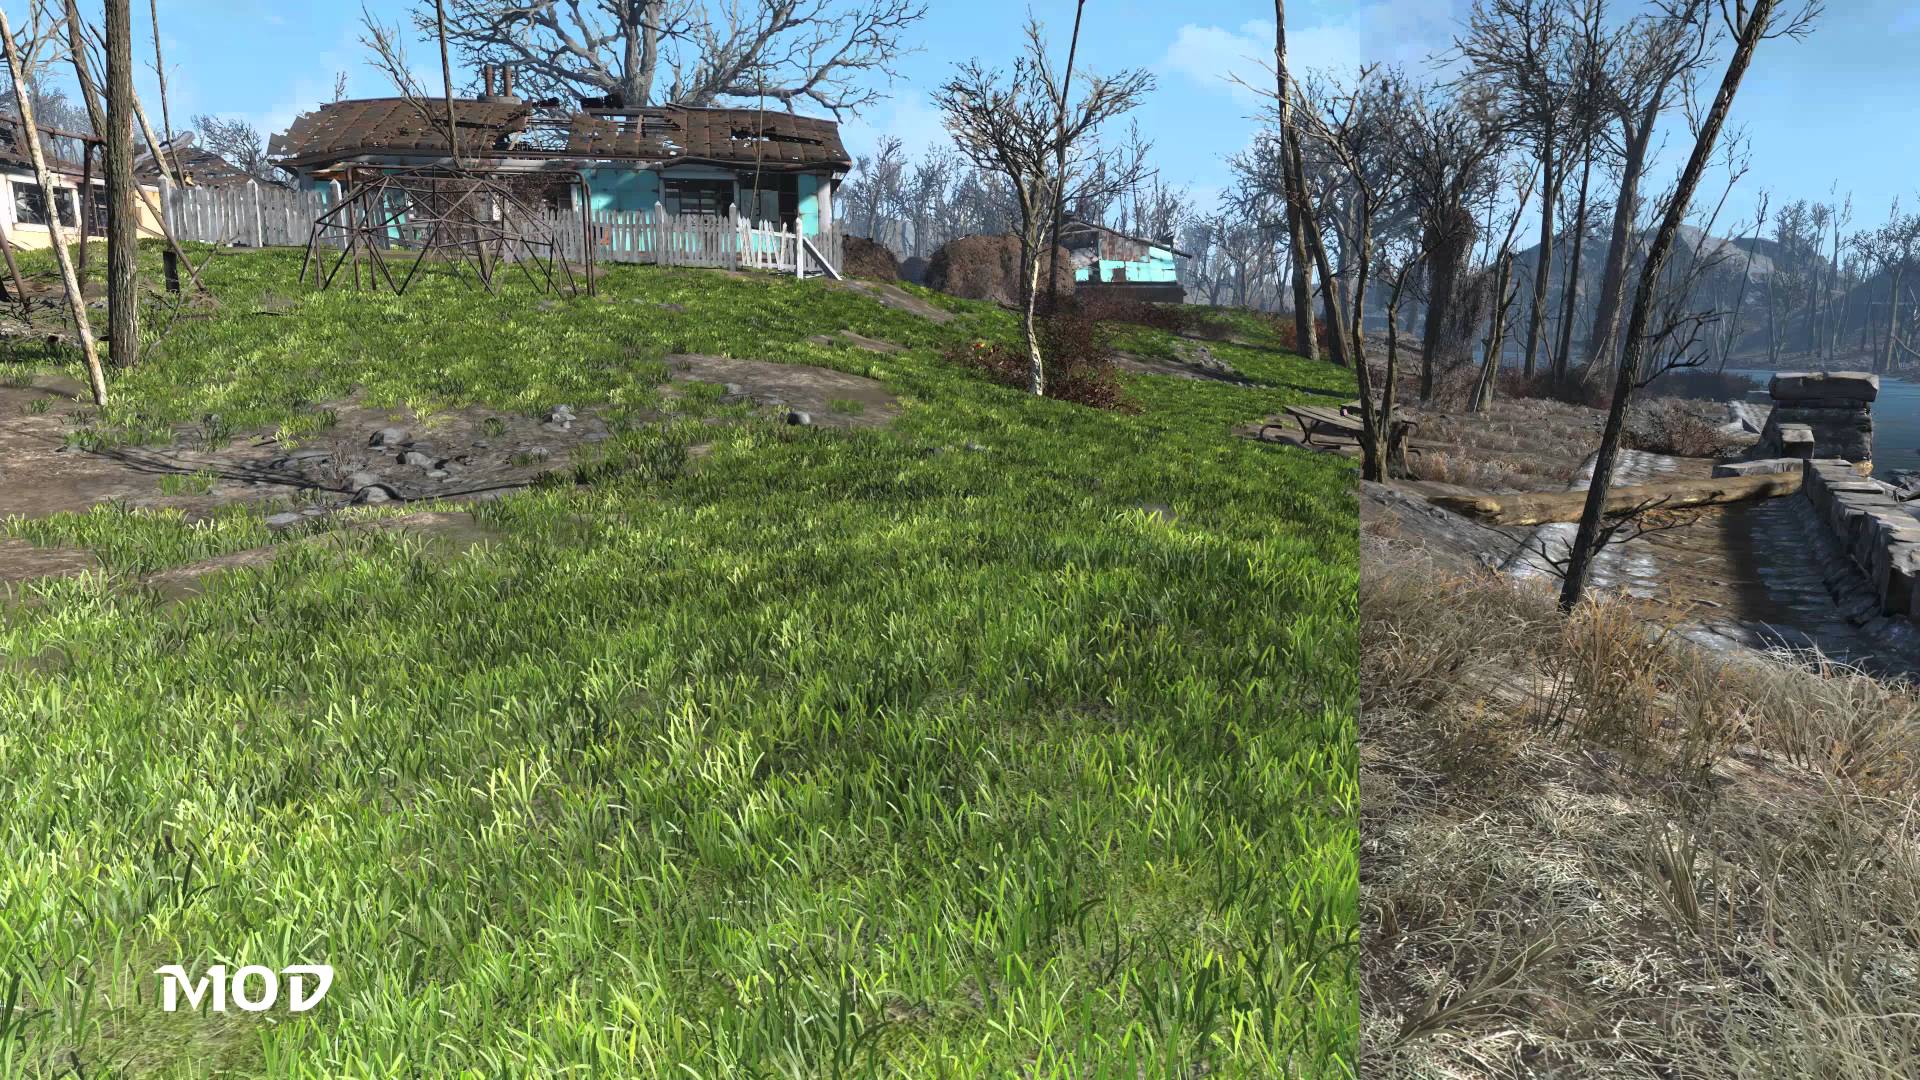 Fallout 4 New Landscape Grass Mod 4K UHD - YouTube